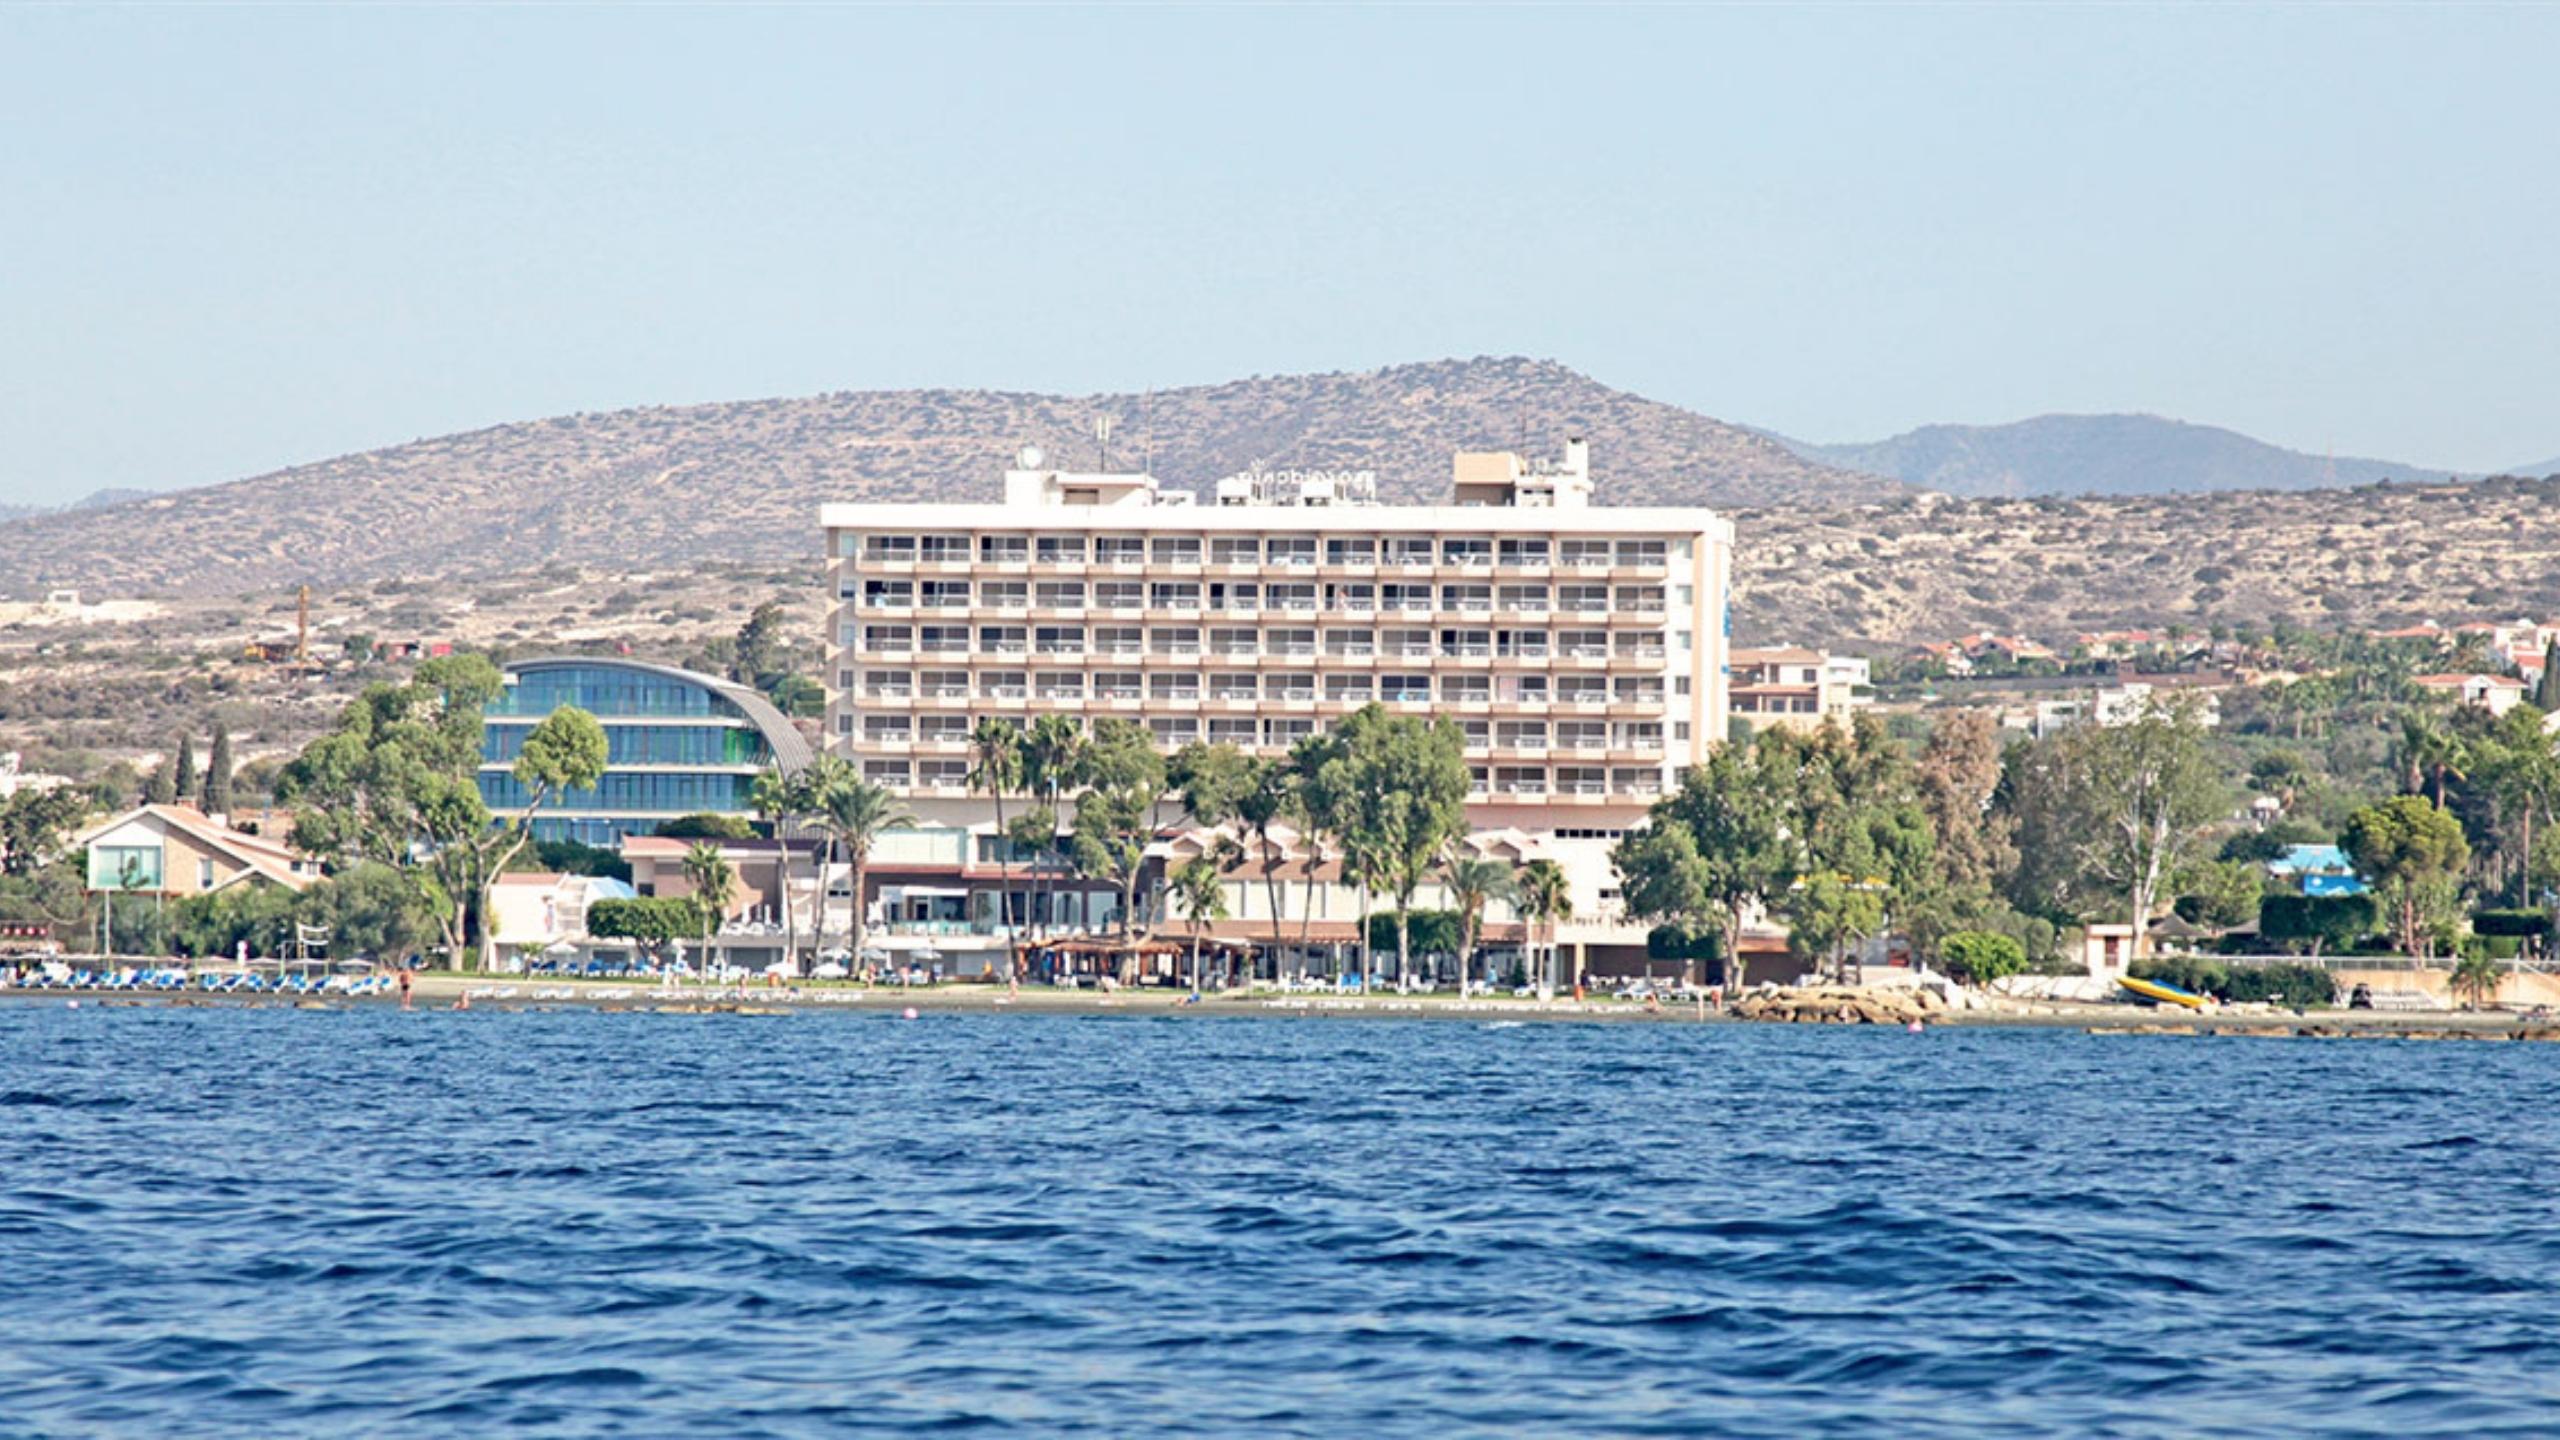 Poseidonia Beach Hotel, Limassol in Cyprus